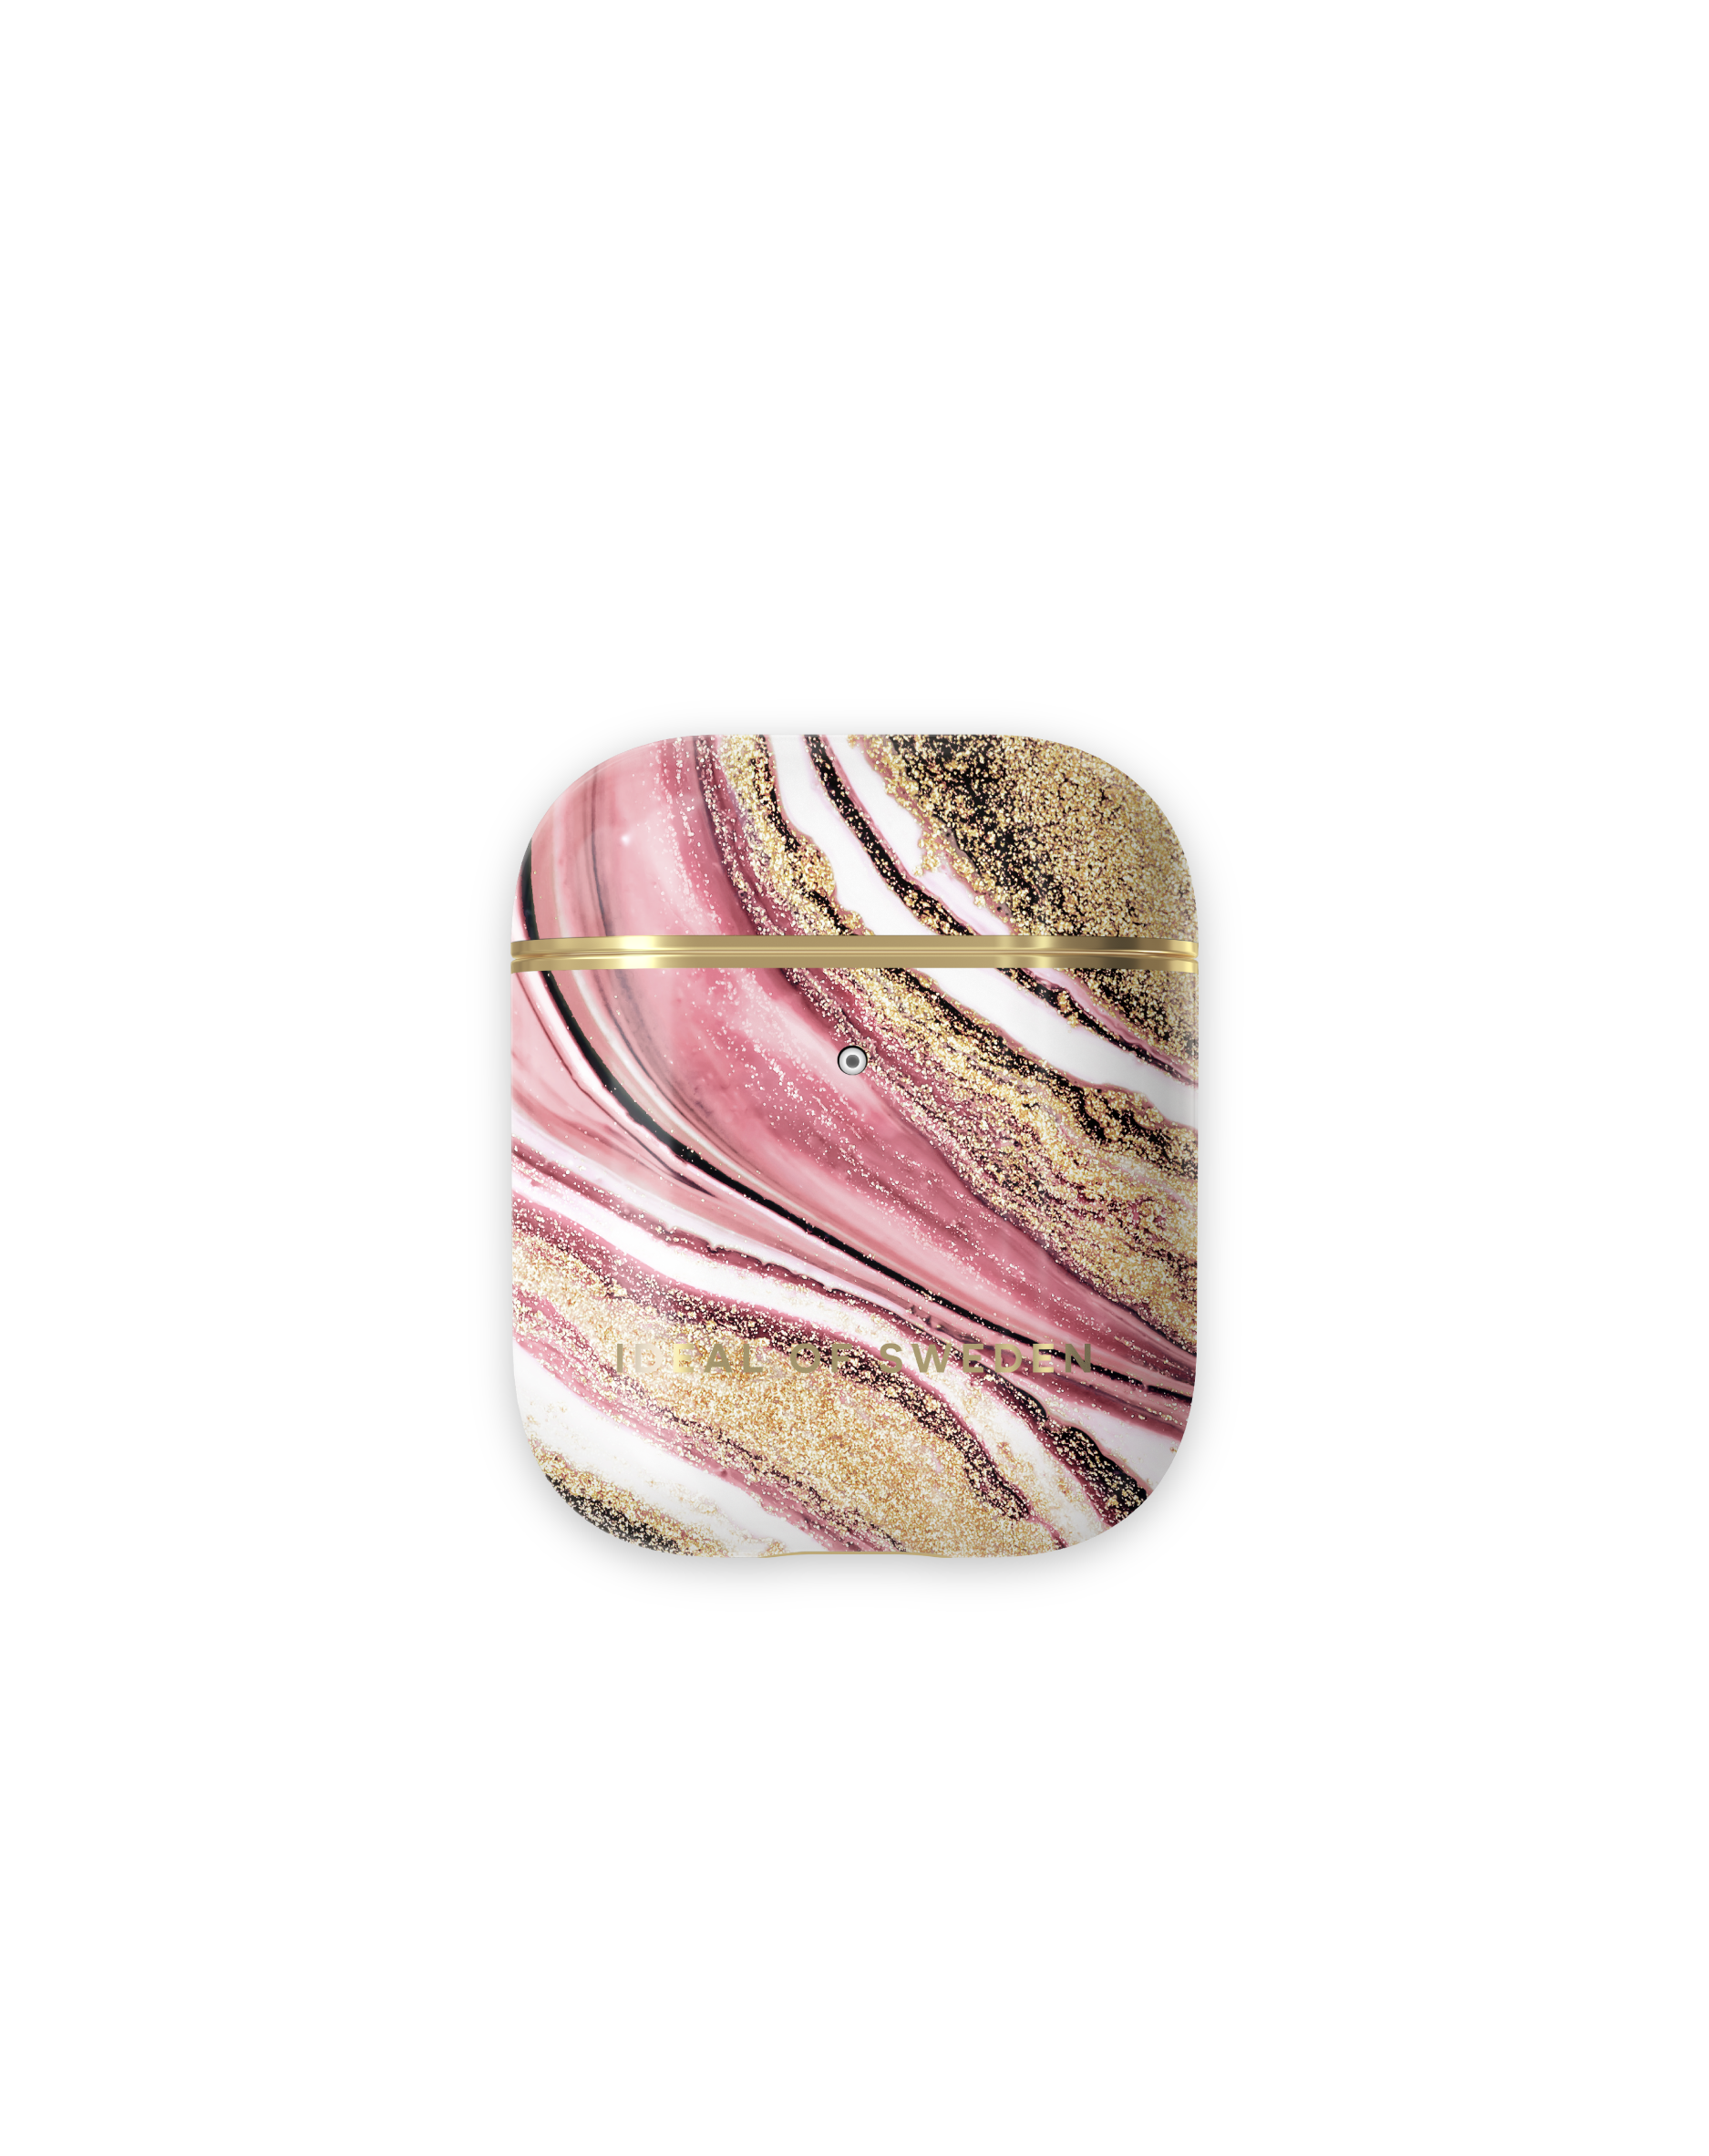 IDEAL OF SWEDEN IDFAPC-193 für: Swirl Cover Pink passend AirPod Apple Case Cosmic Full